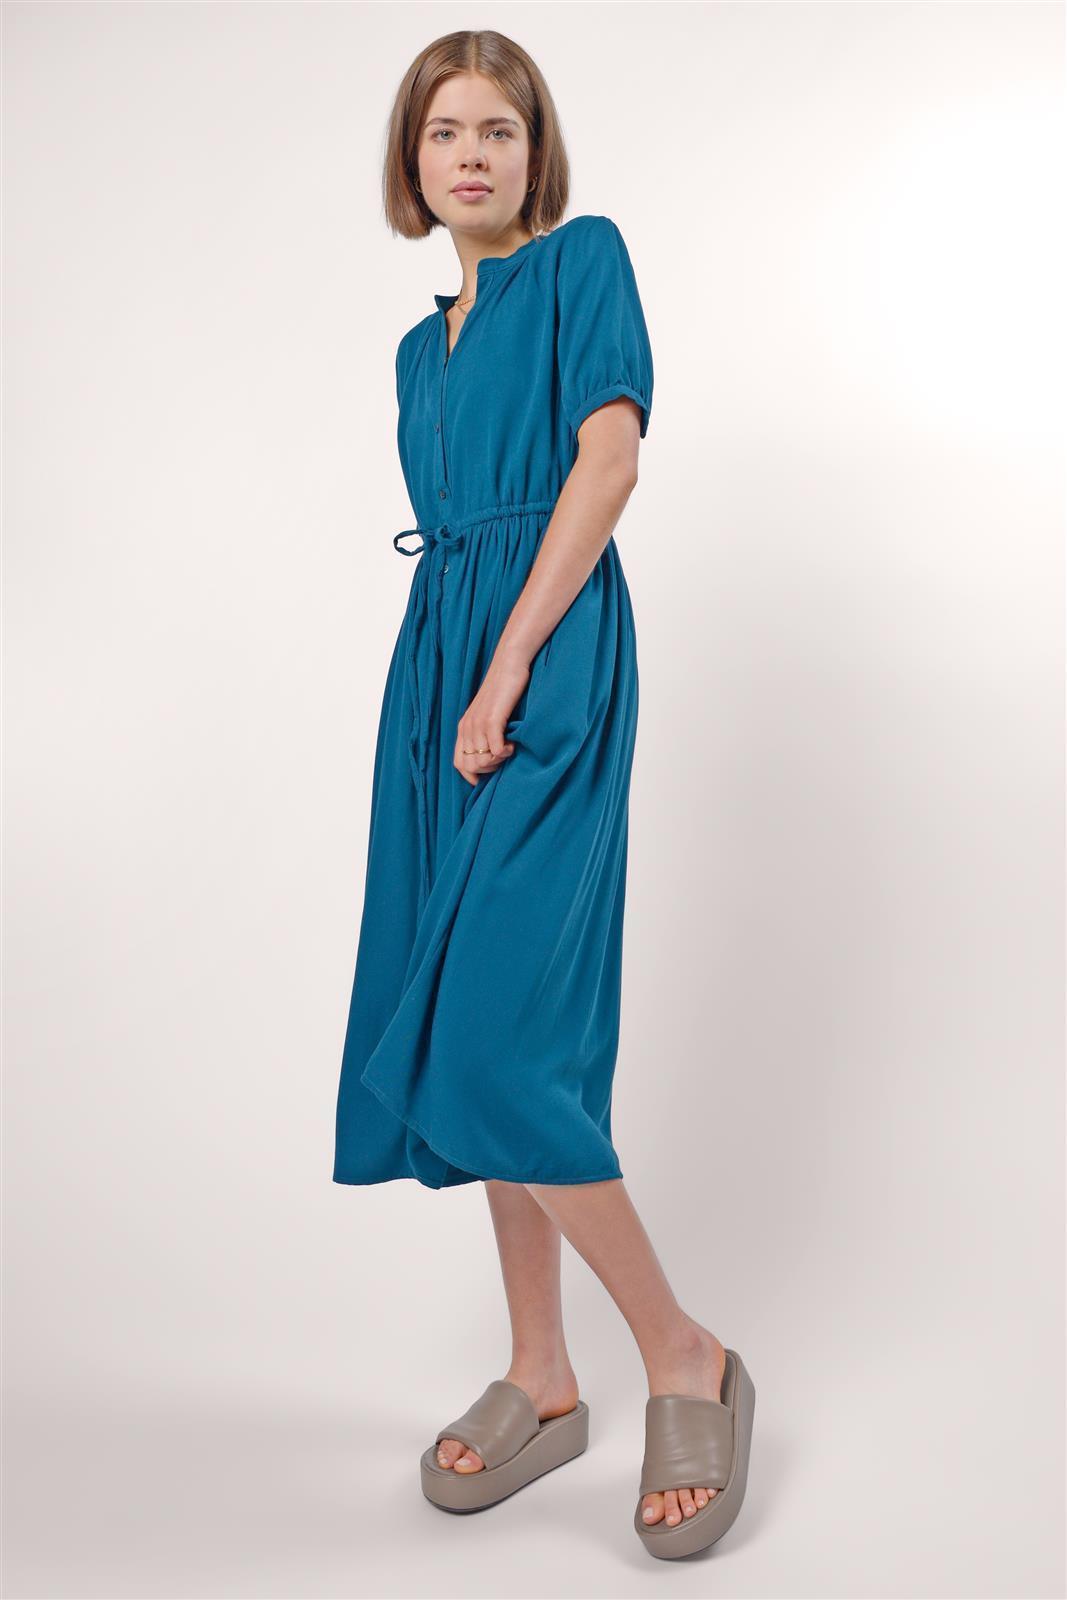 Blusen-Kleid Modell: Feaina